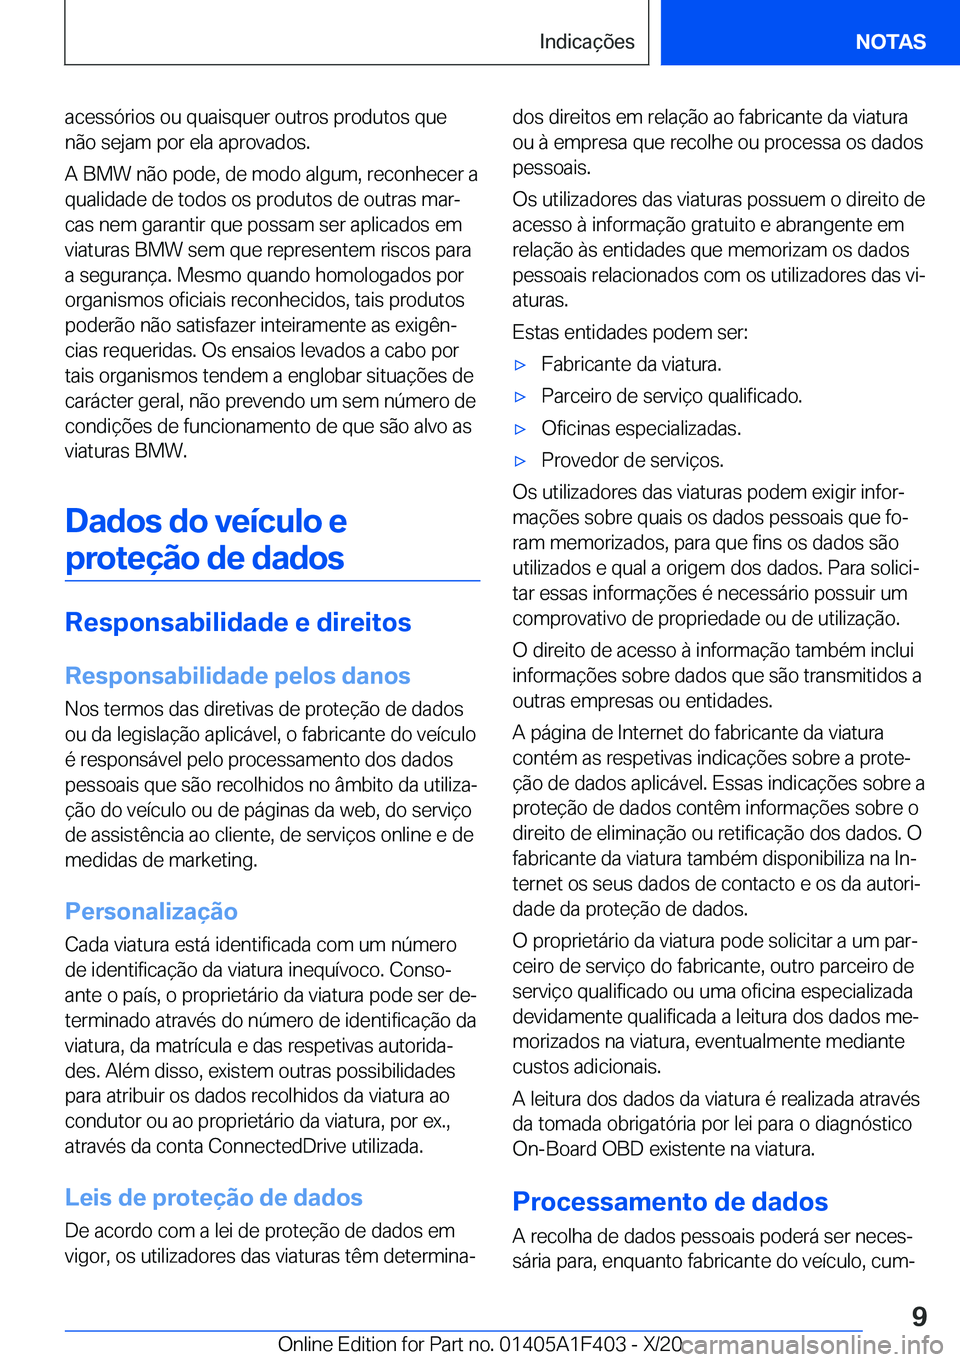 BMW X5 2021  Manual do condutor (in Portuguese) �a�c�e�s�s�ó�r�i�o�s��o�u��q�u�a�i�s�q�u�e�r��o�u�t�r�o�s��p�r�o�d�u�t�o�s��q�u�e
�n�ã�o��s�e�j�a�m��p�o�r��e�l�a��a�p�r�o�v�a�d�o�s�.
�A��B�M�W��n�ã�o��p�o�d�e�,��d�e��m�o�d�o��a�l�